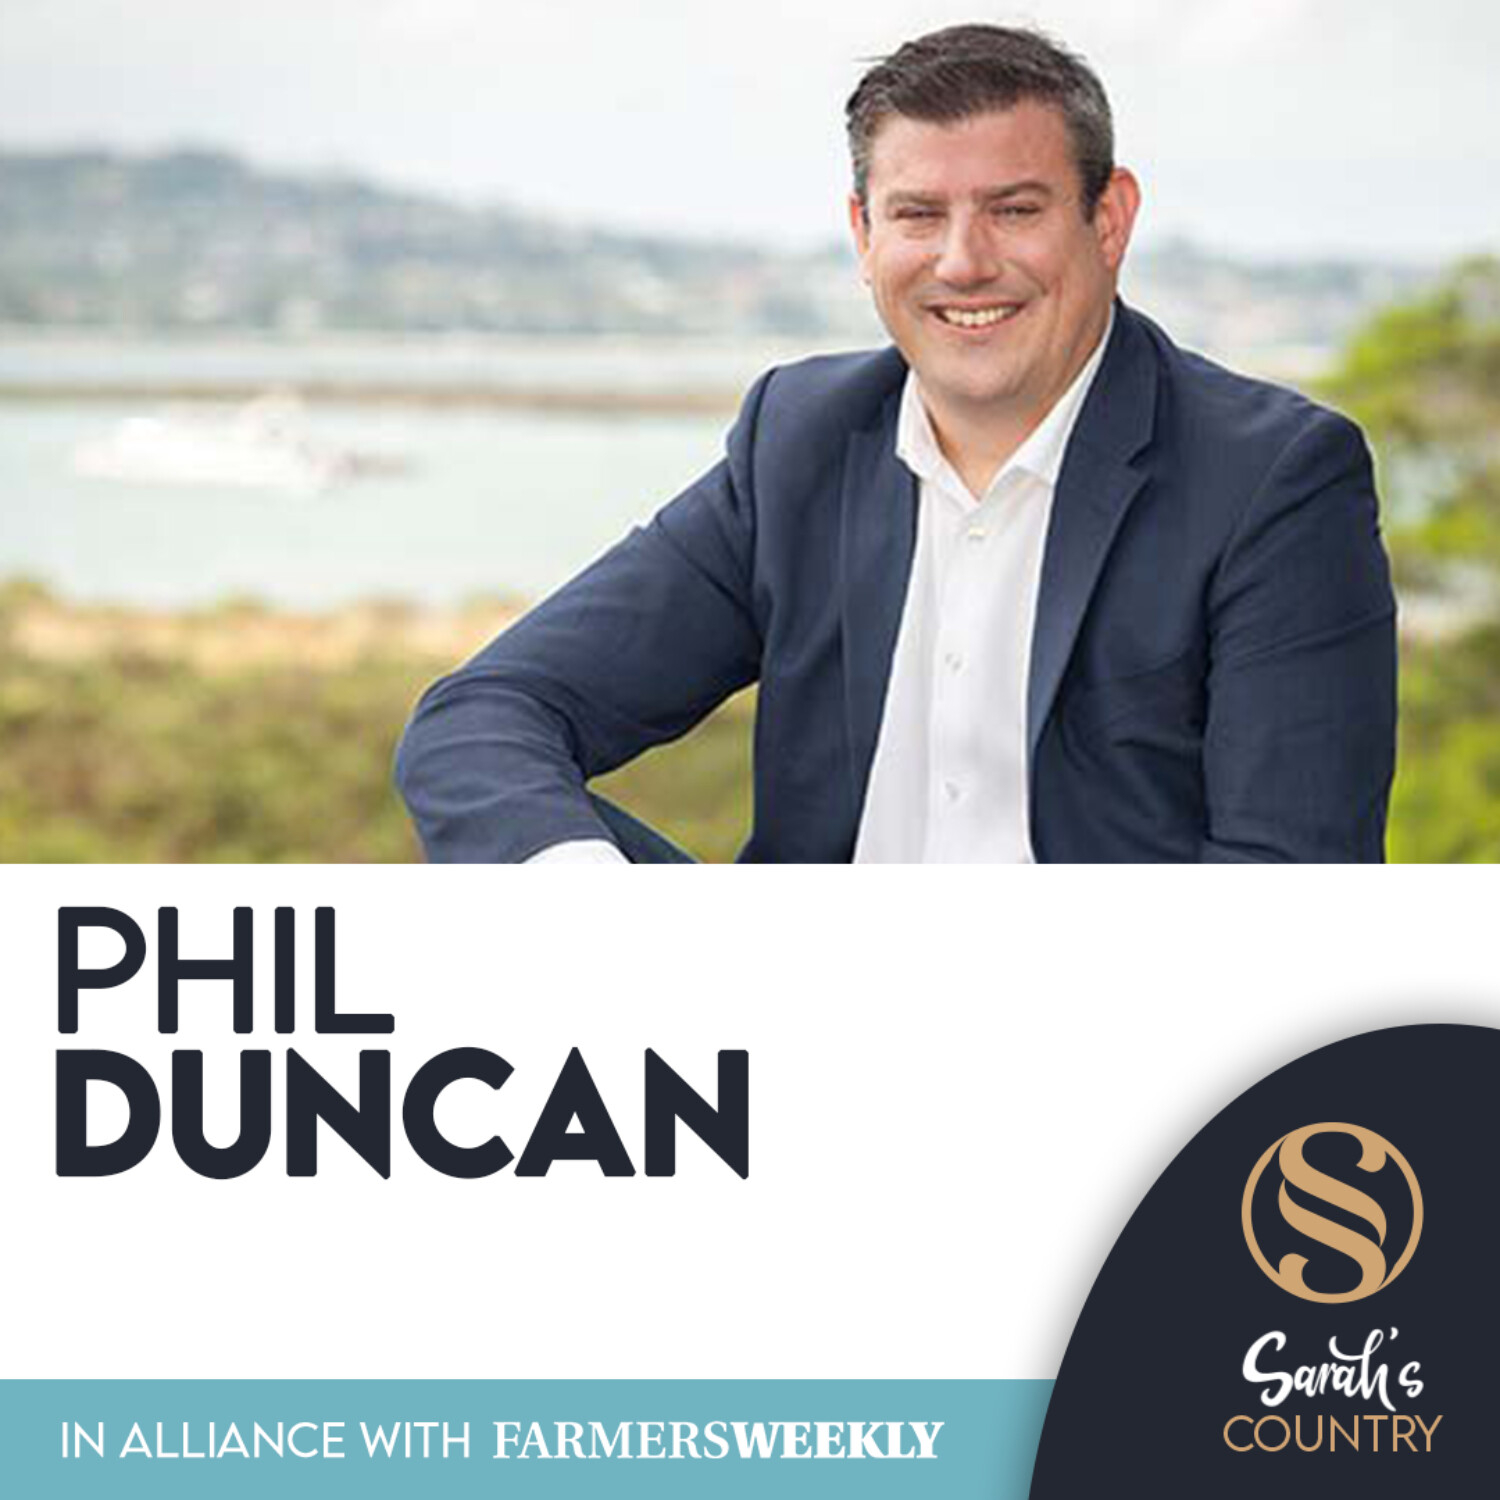 Phil Duncan | “Heat brings risk of FE”